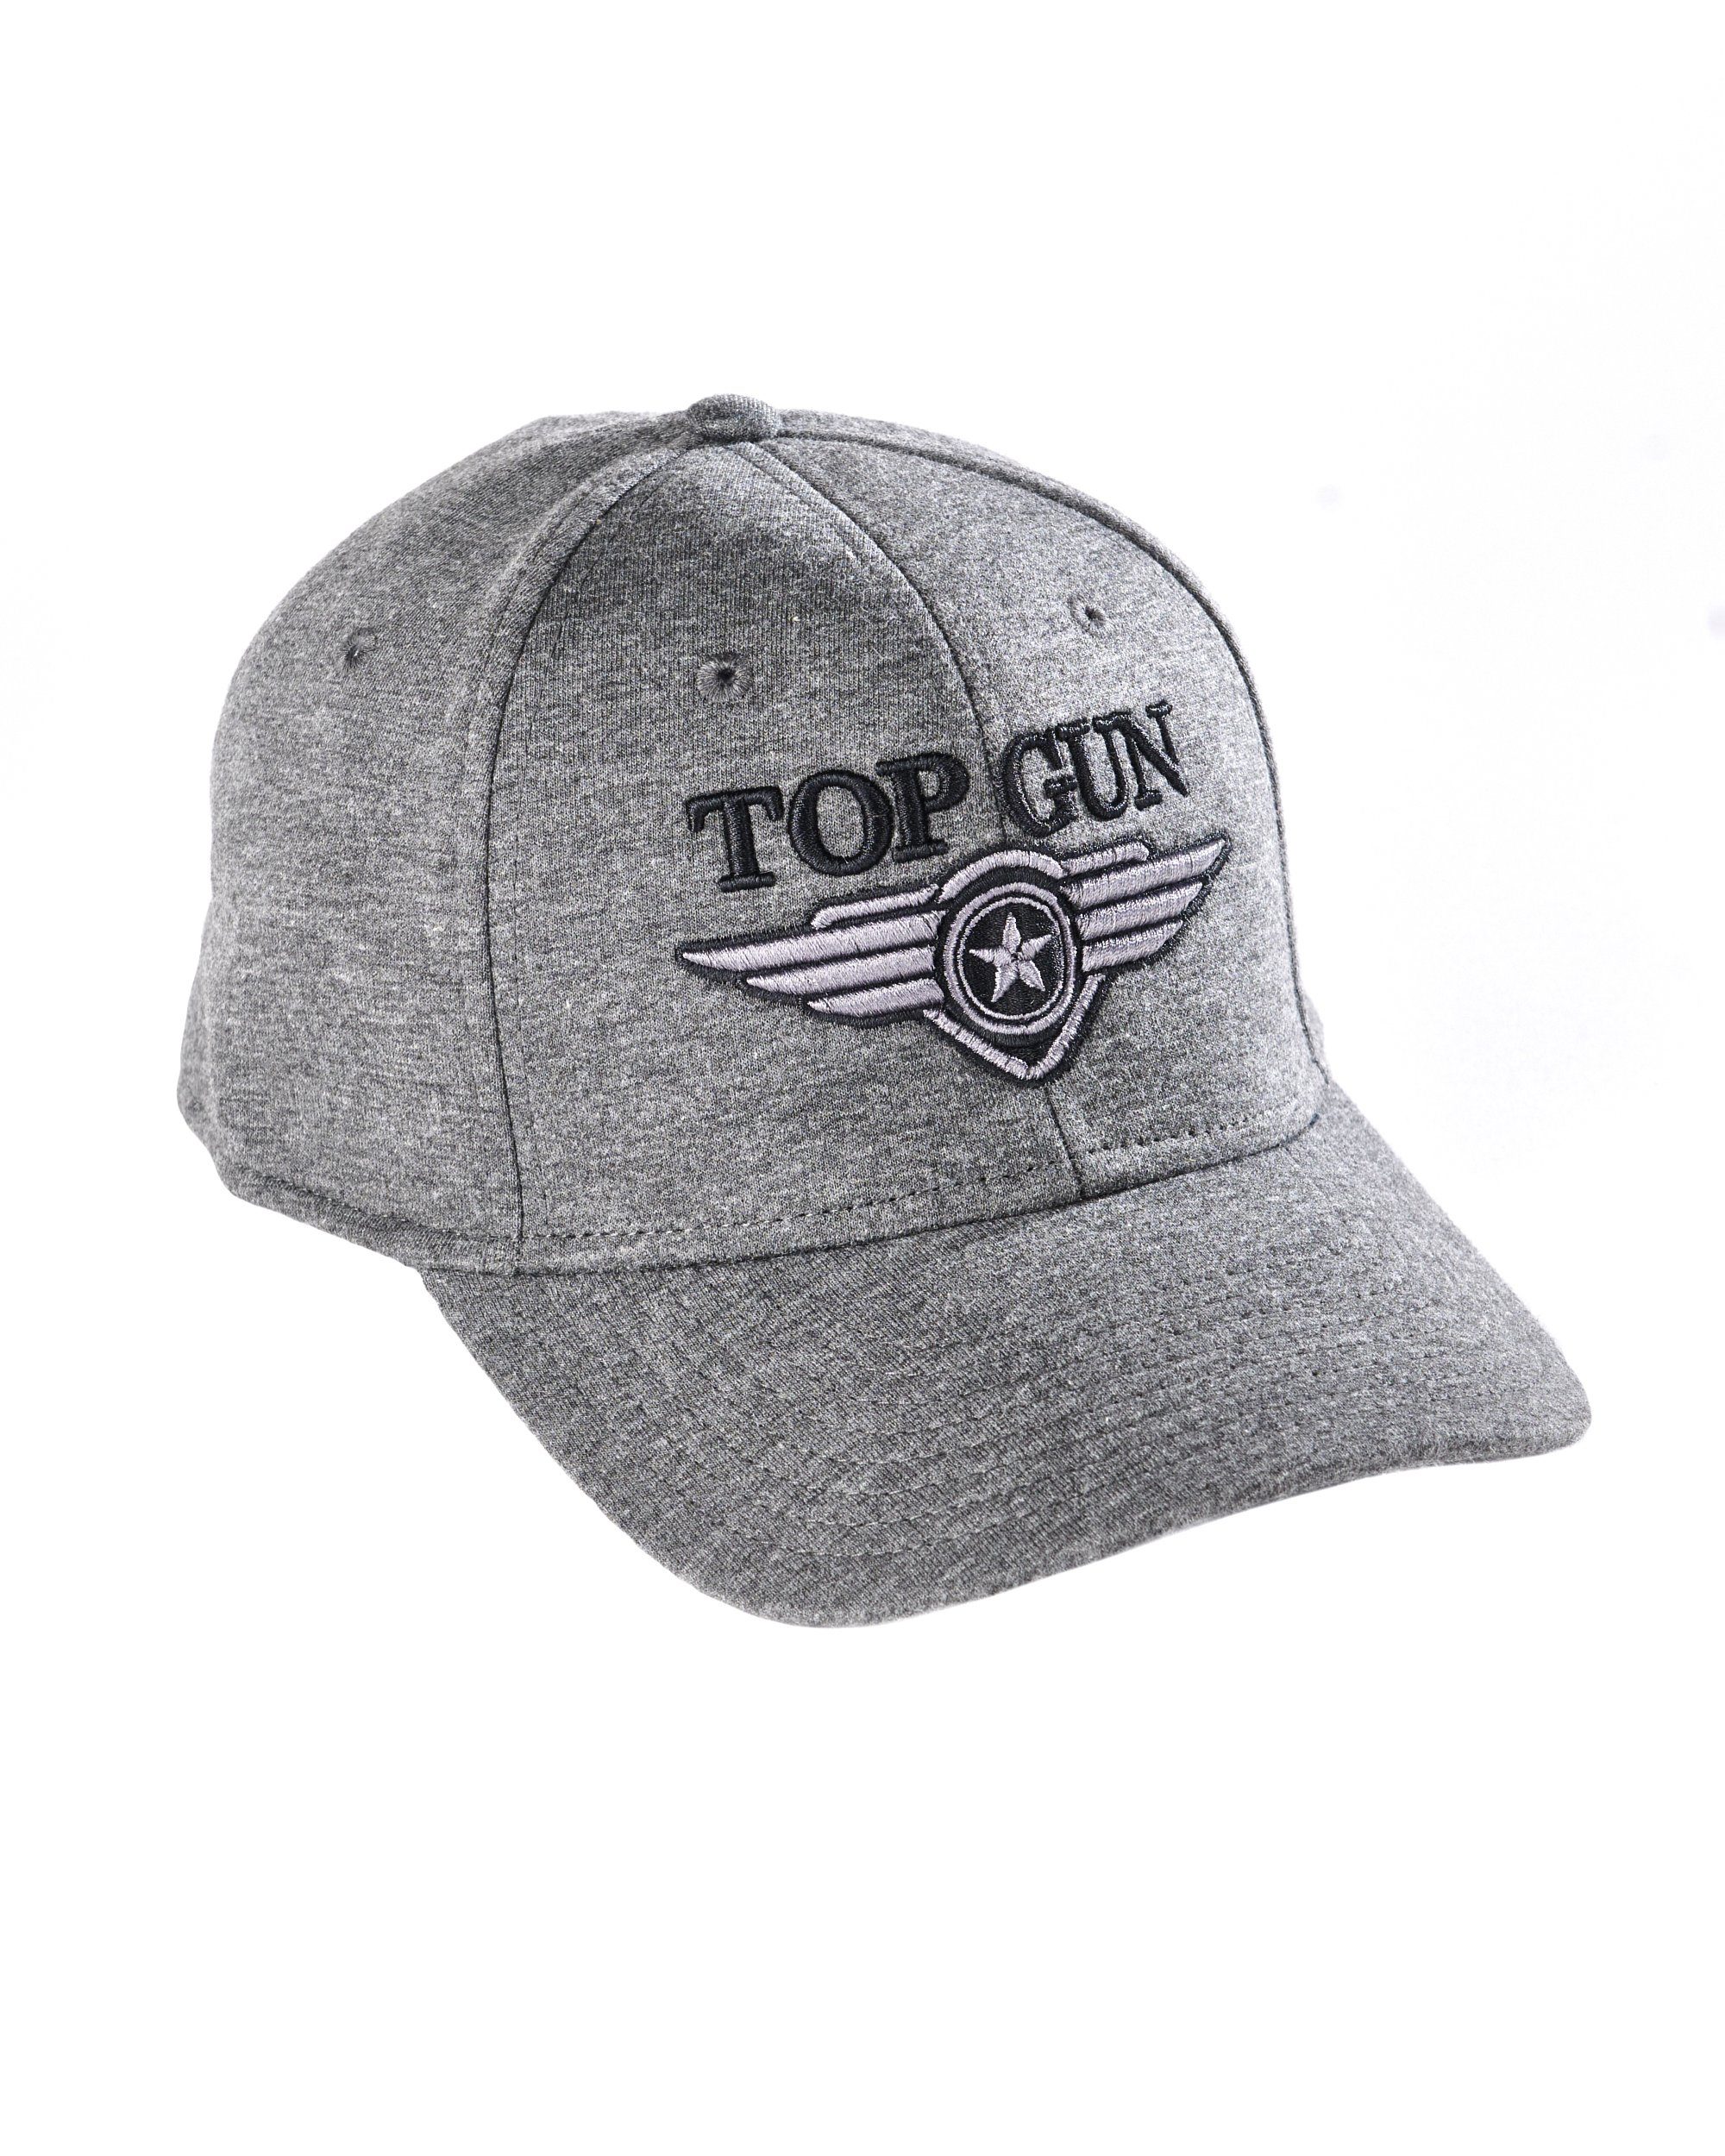 TOP GUN Snapback black TG20193167 Cap Snapback